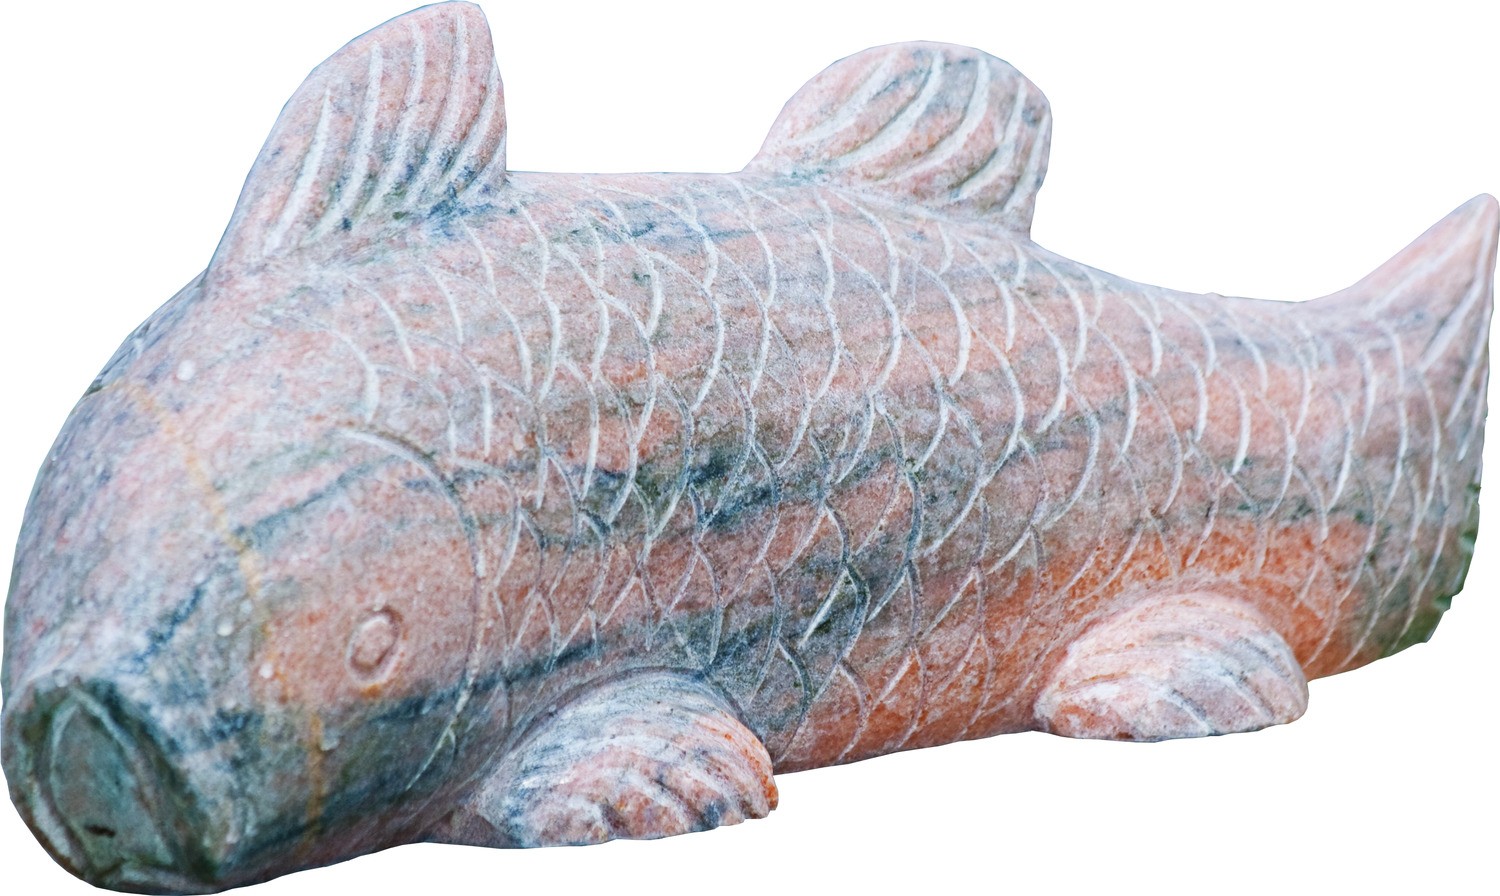 Fisch "Koi" Länge ca. 20 cm, Marmor bunt